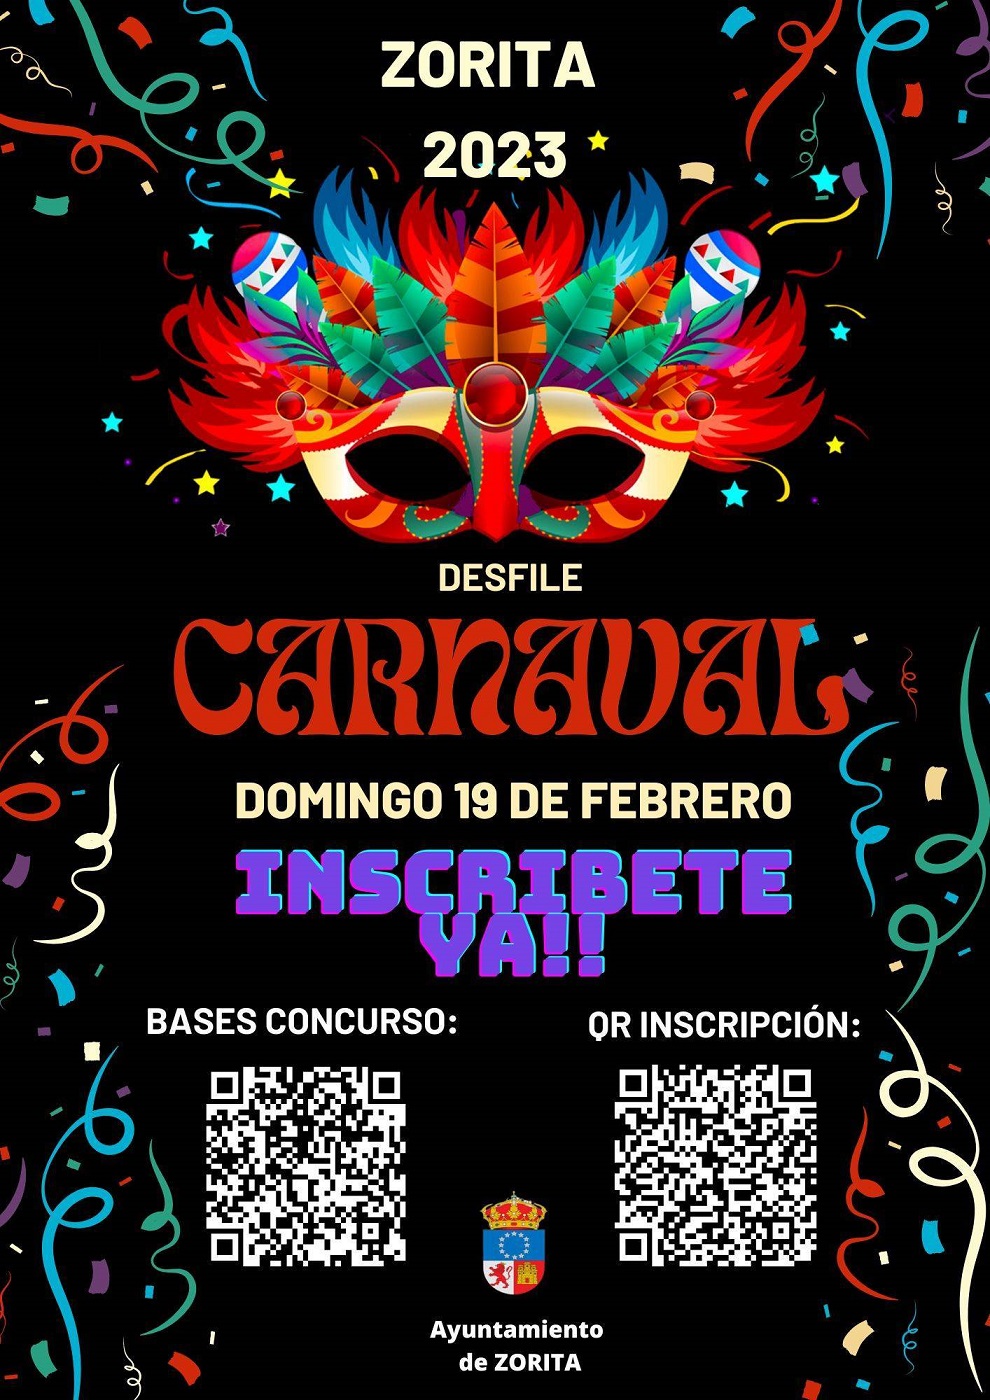 Carnaval (2023) - Zorita (Cáceres) 5